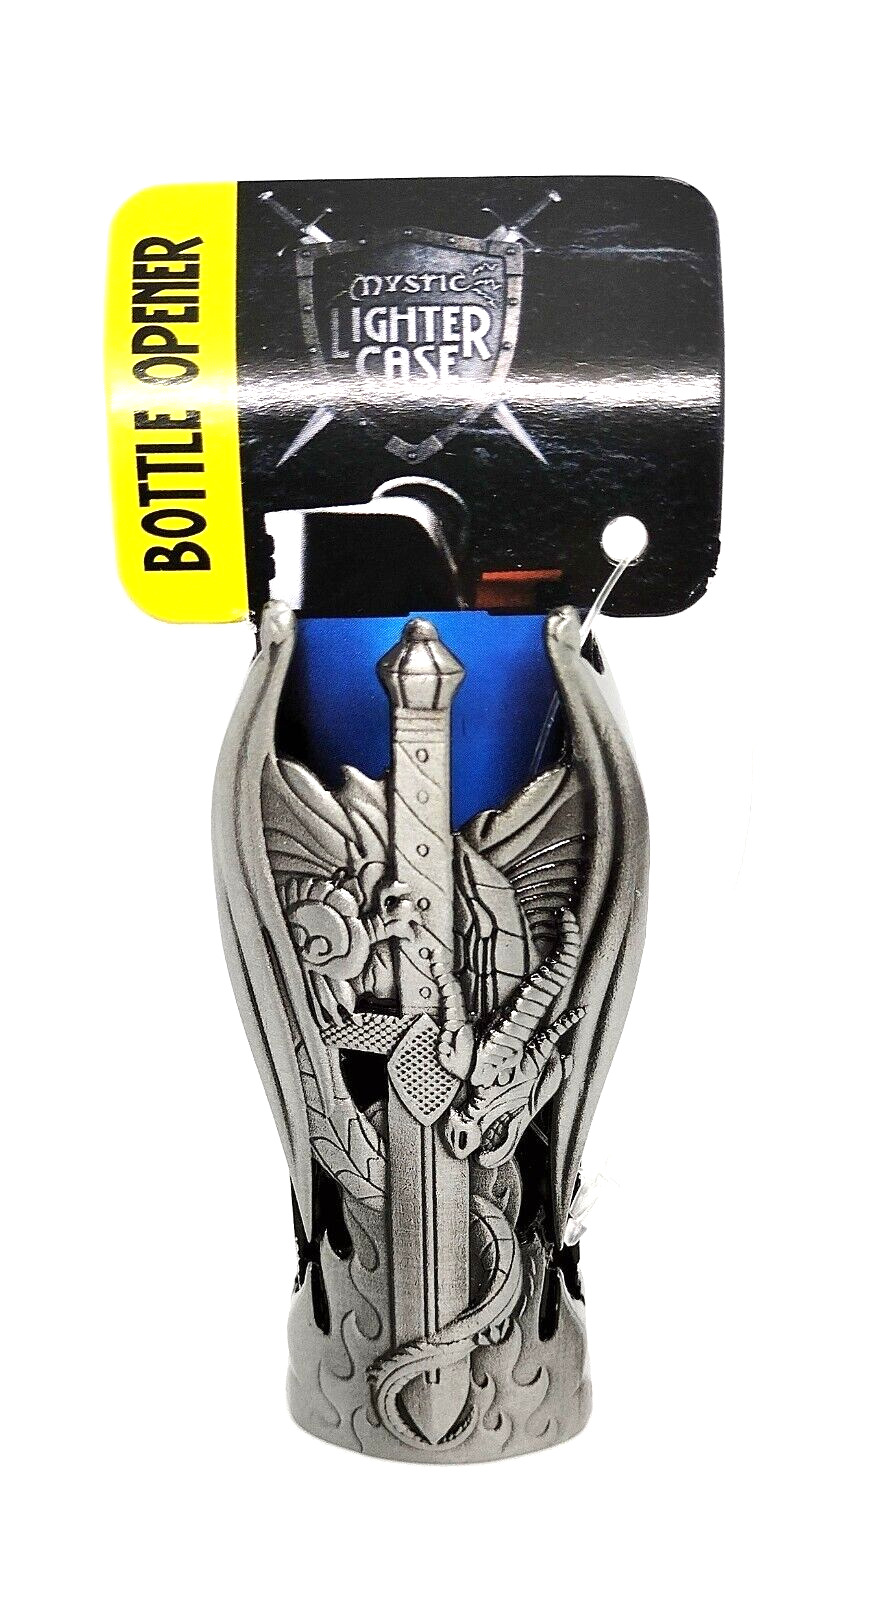 Smokezilla Mystic Pewter Design Sword Metal Bottle Opener Big Bic Lighter Case